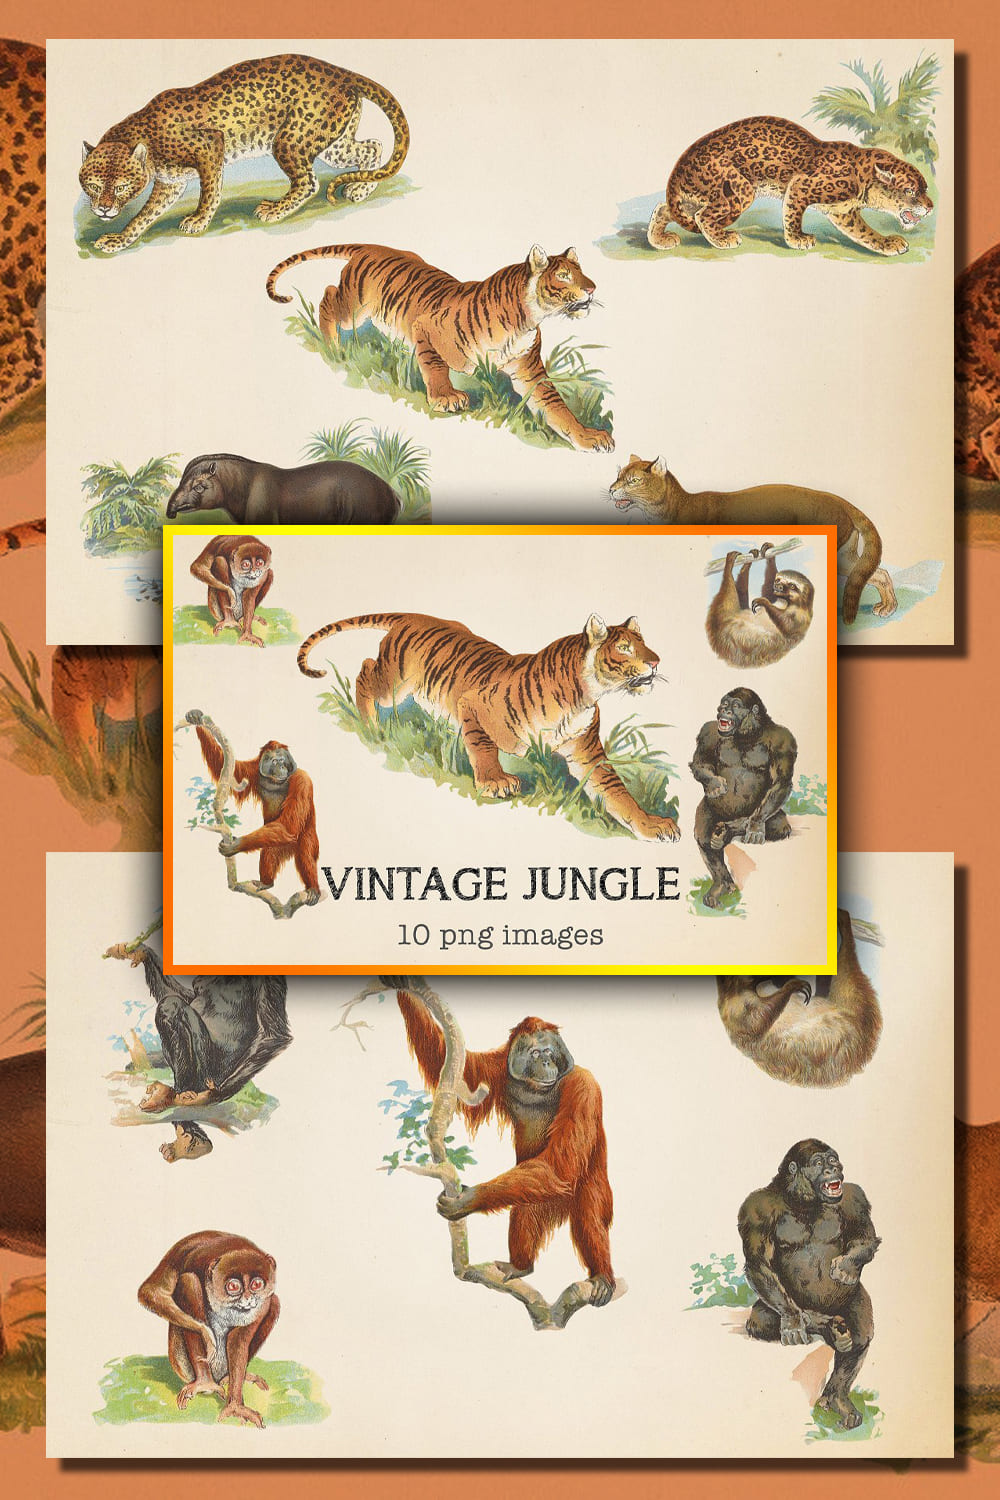 7494097 vintage jungle animals pinterest 1000 1500 43